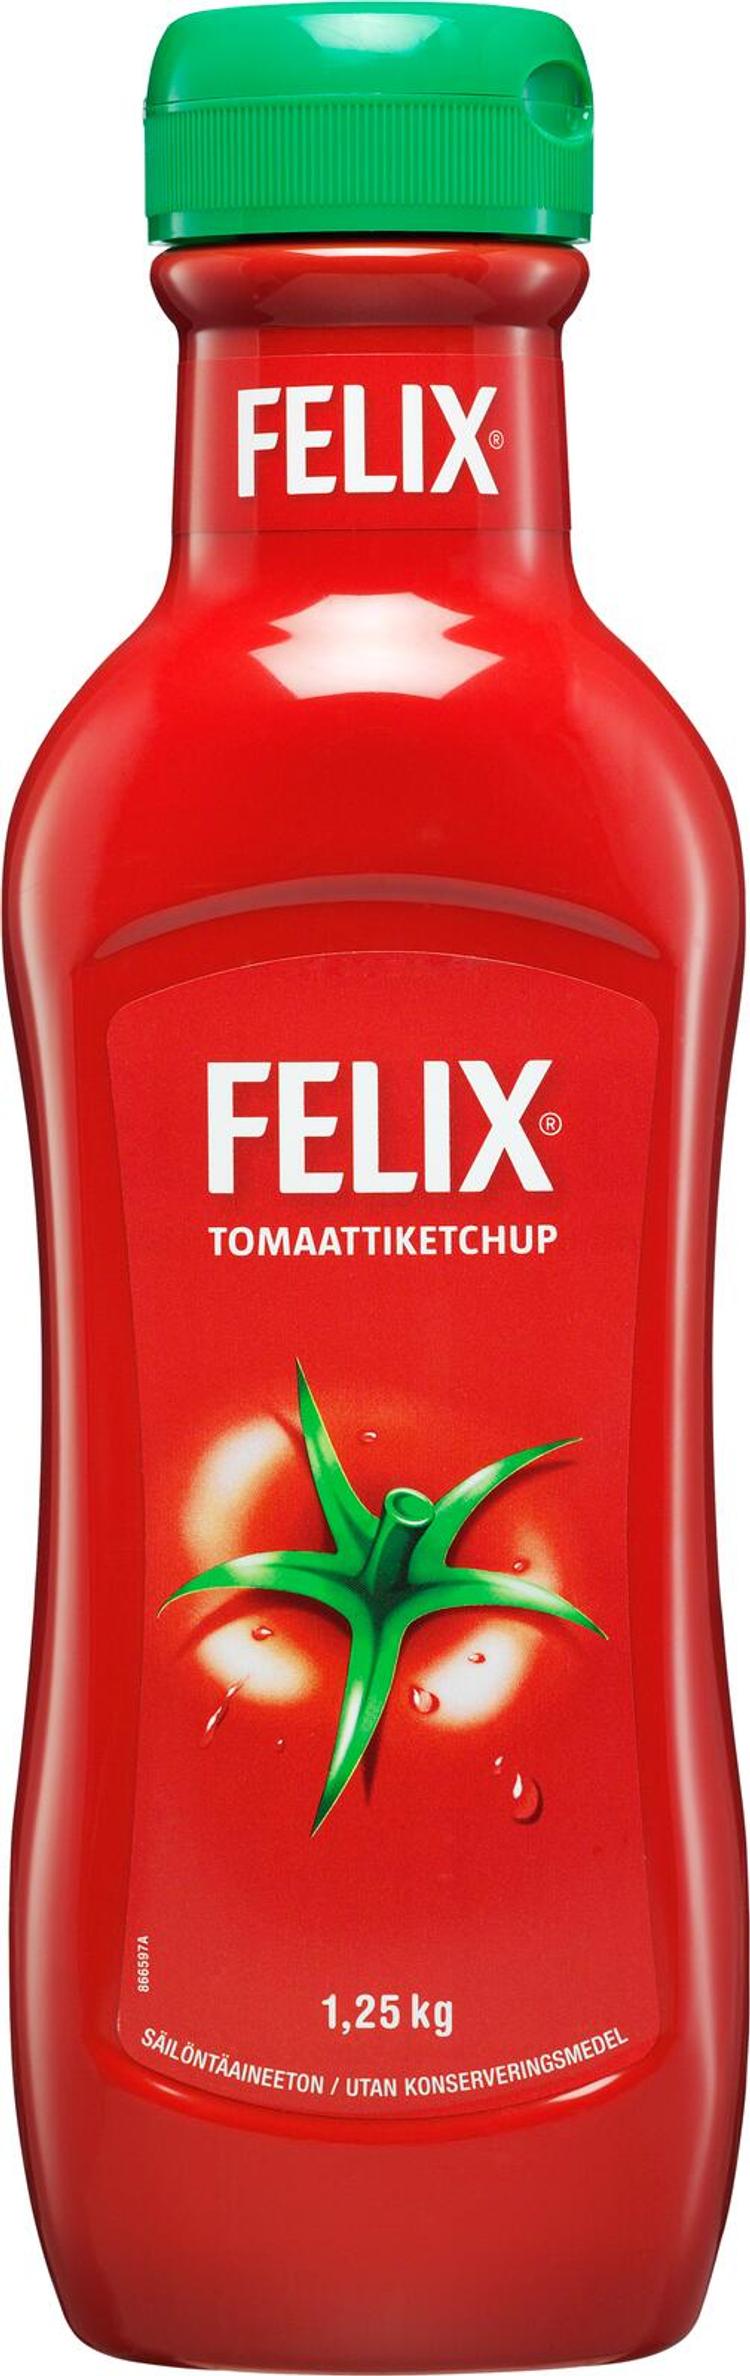 Felix ketchup 1250g